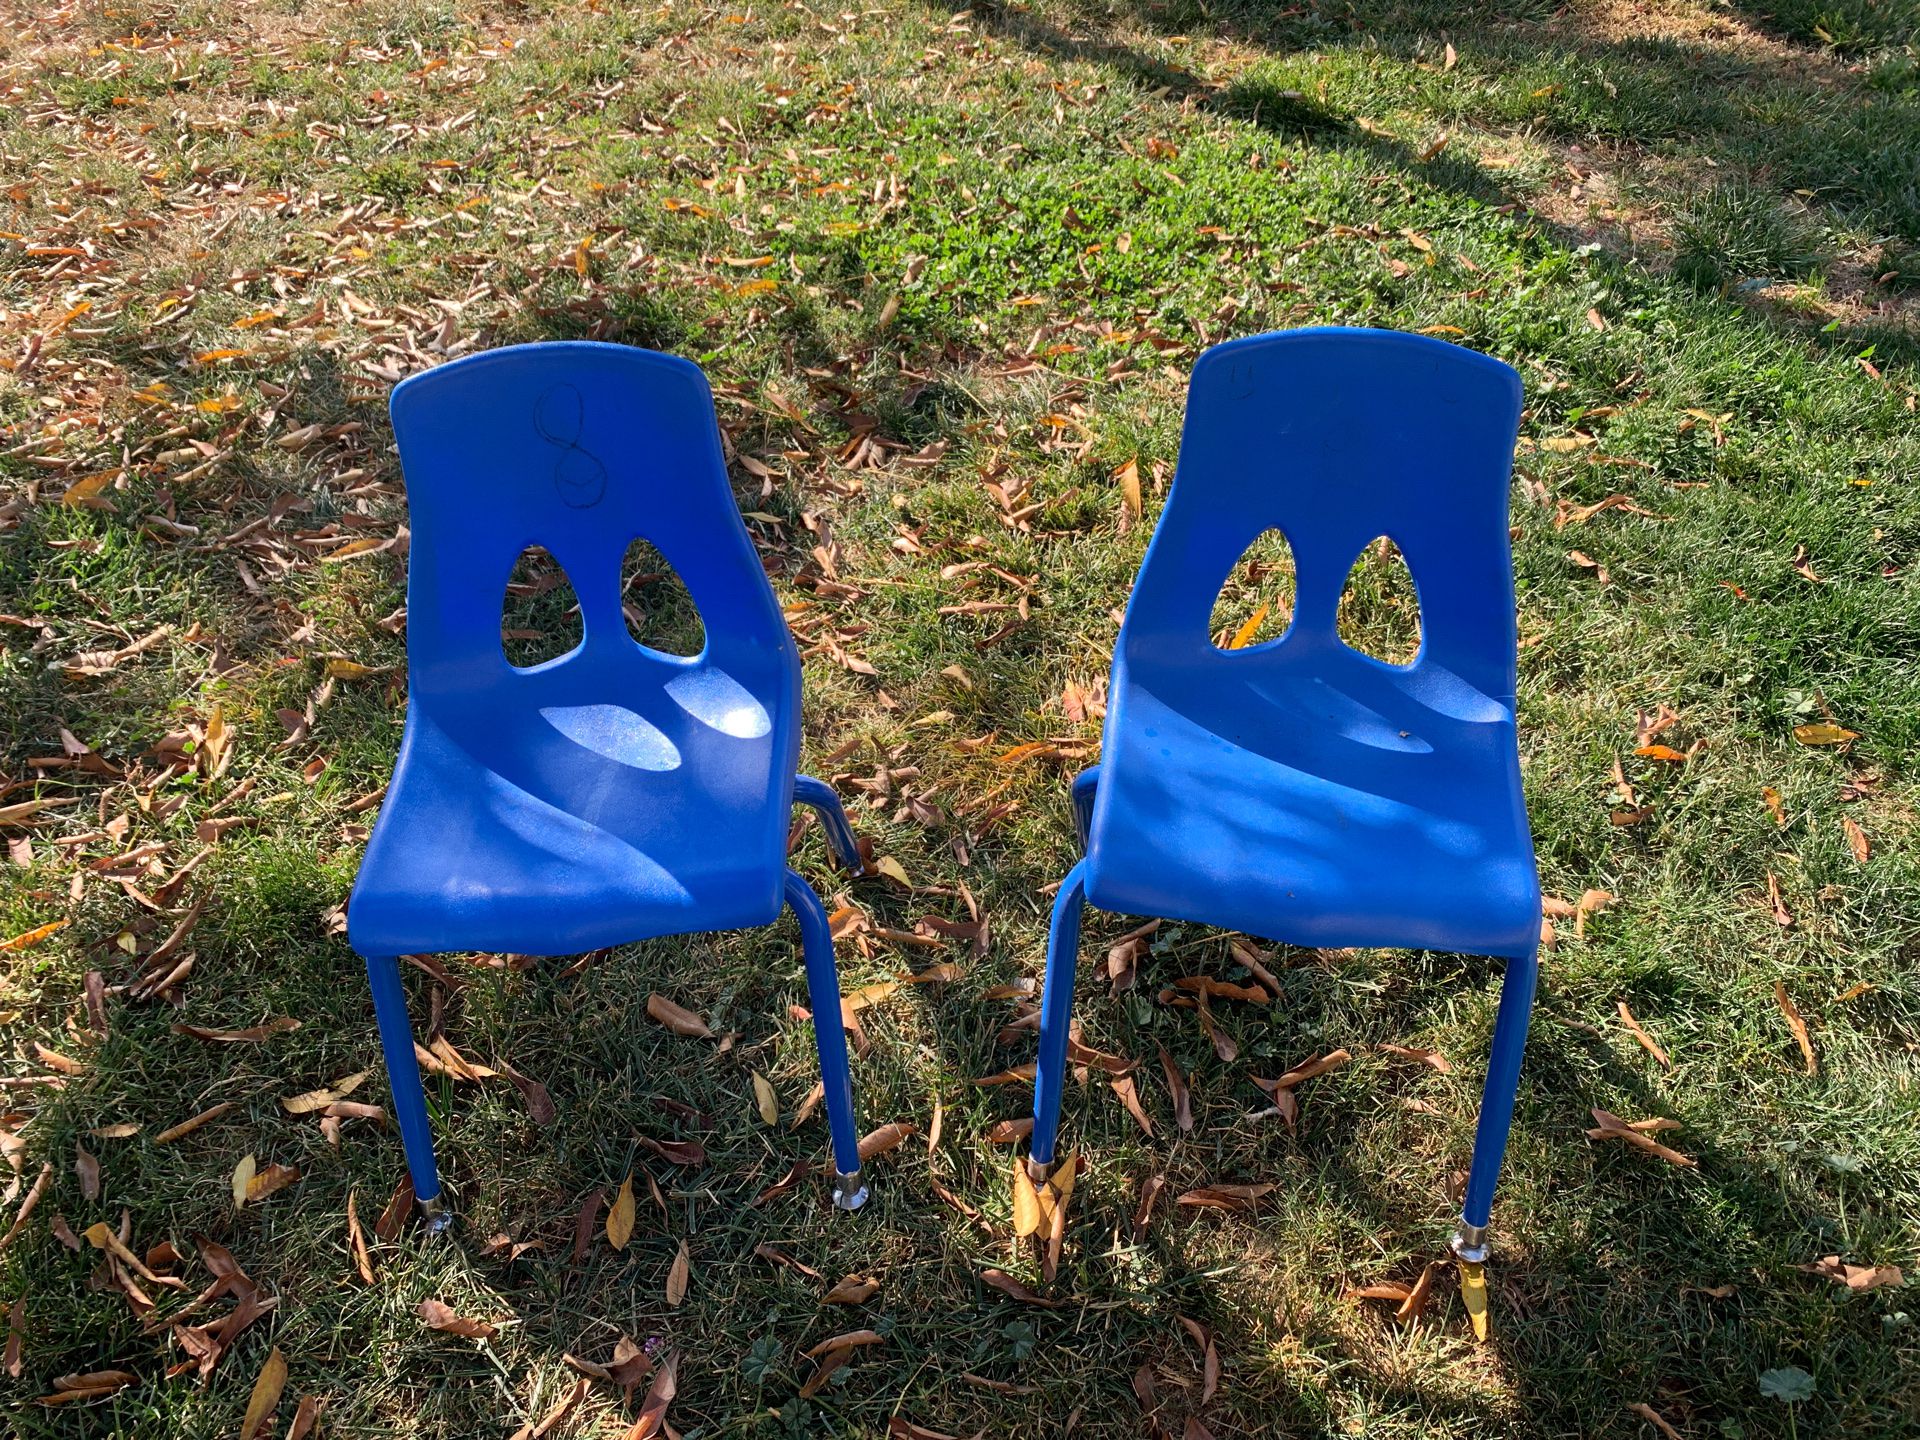 Kids plastic chairs